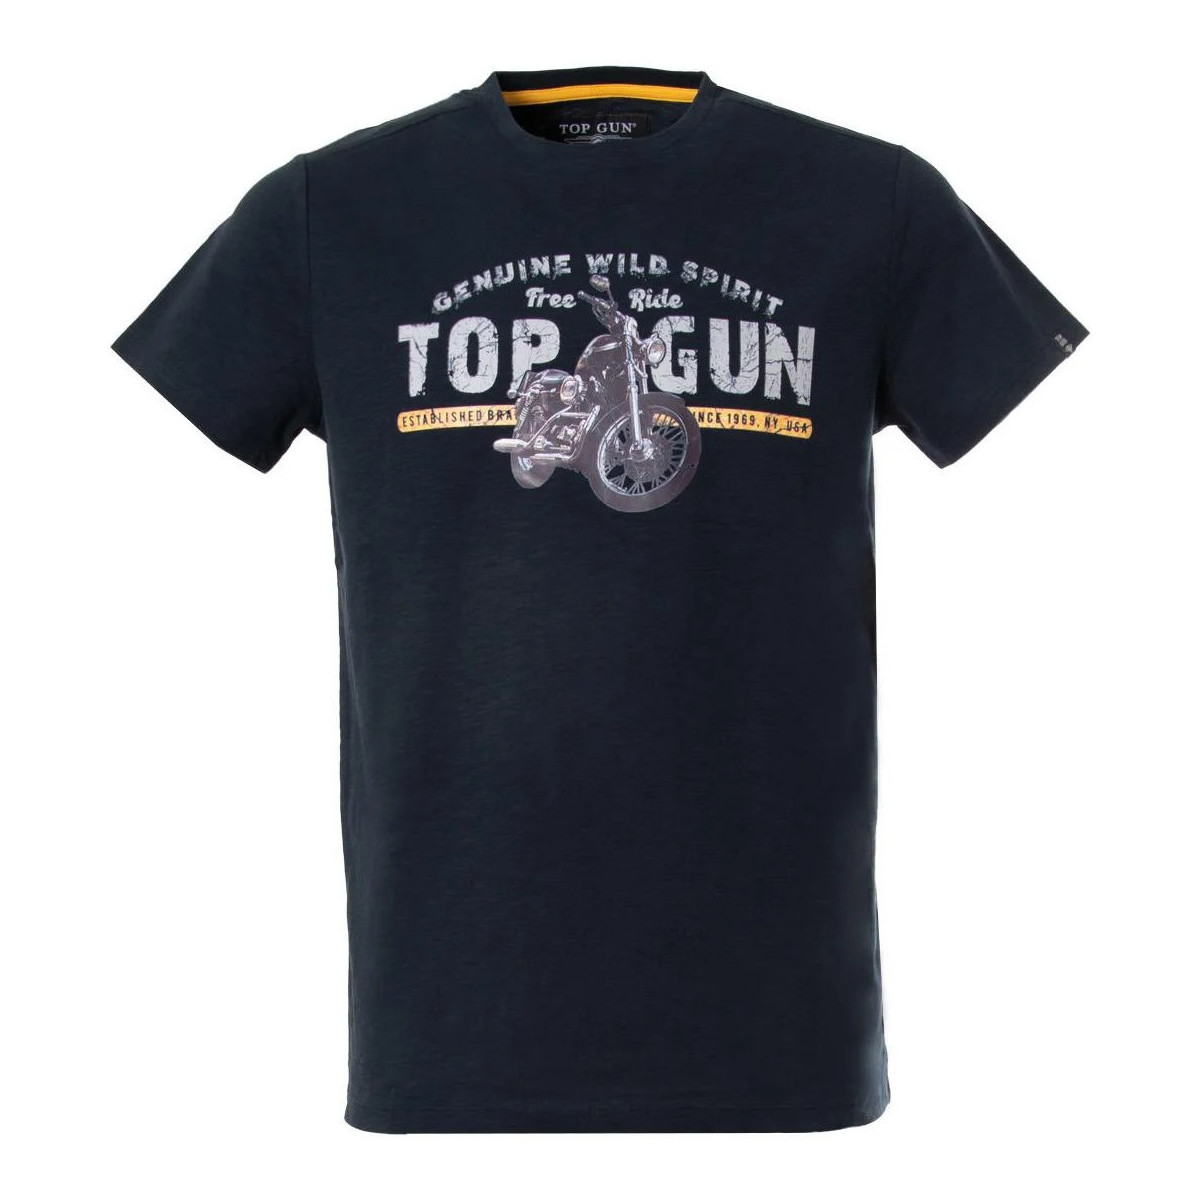 Vêtements Homme Débardeurs / T-shirts sans manche Top Gun TEE SHIRT TG-TS-106 NAVY Bleu